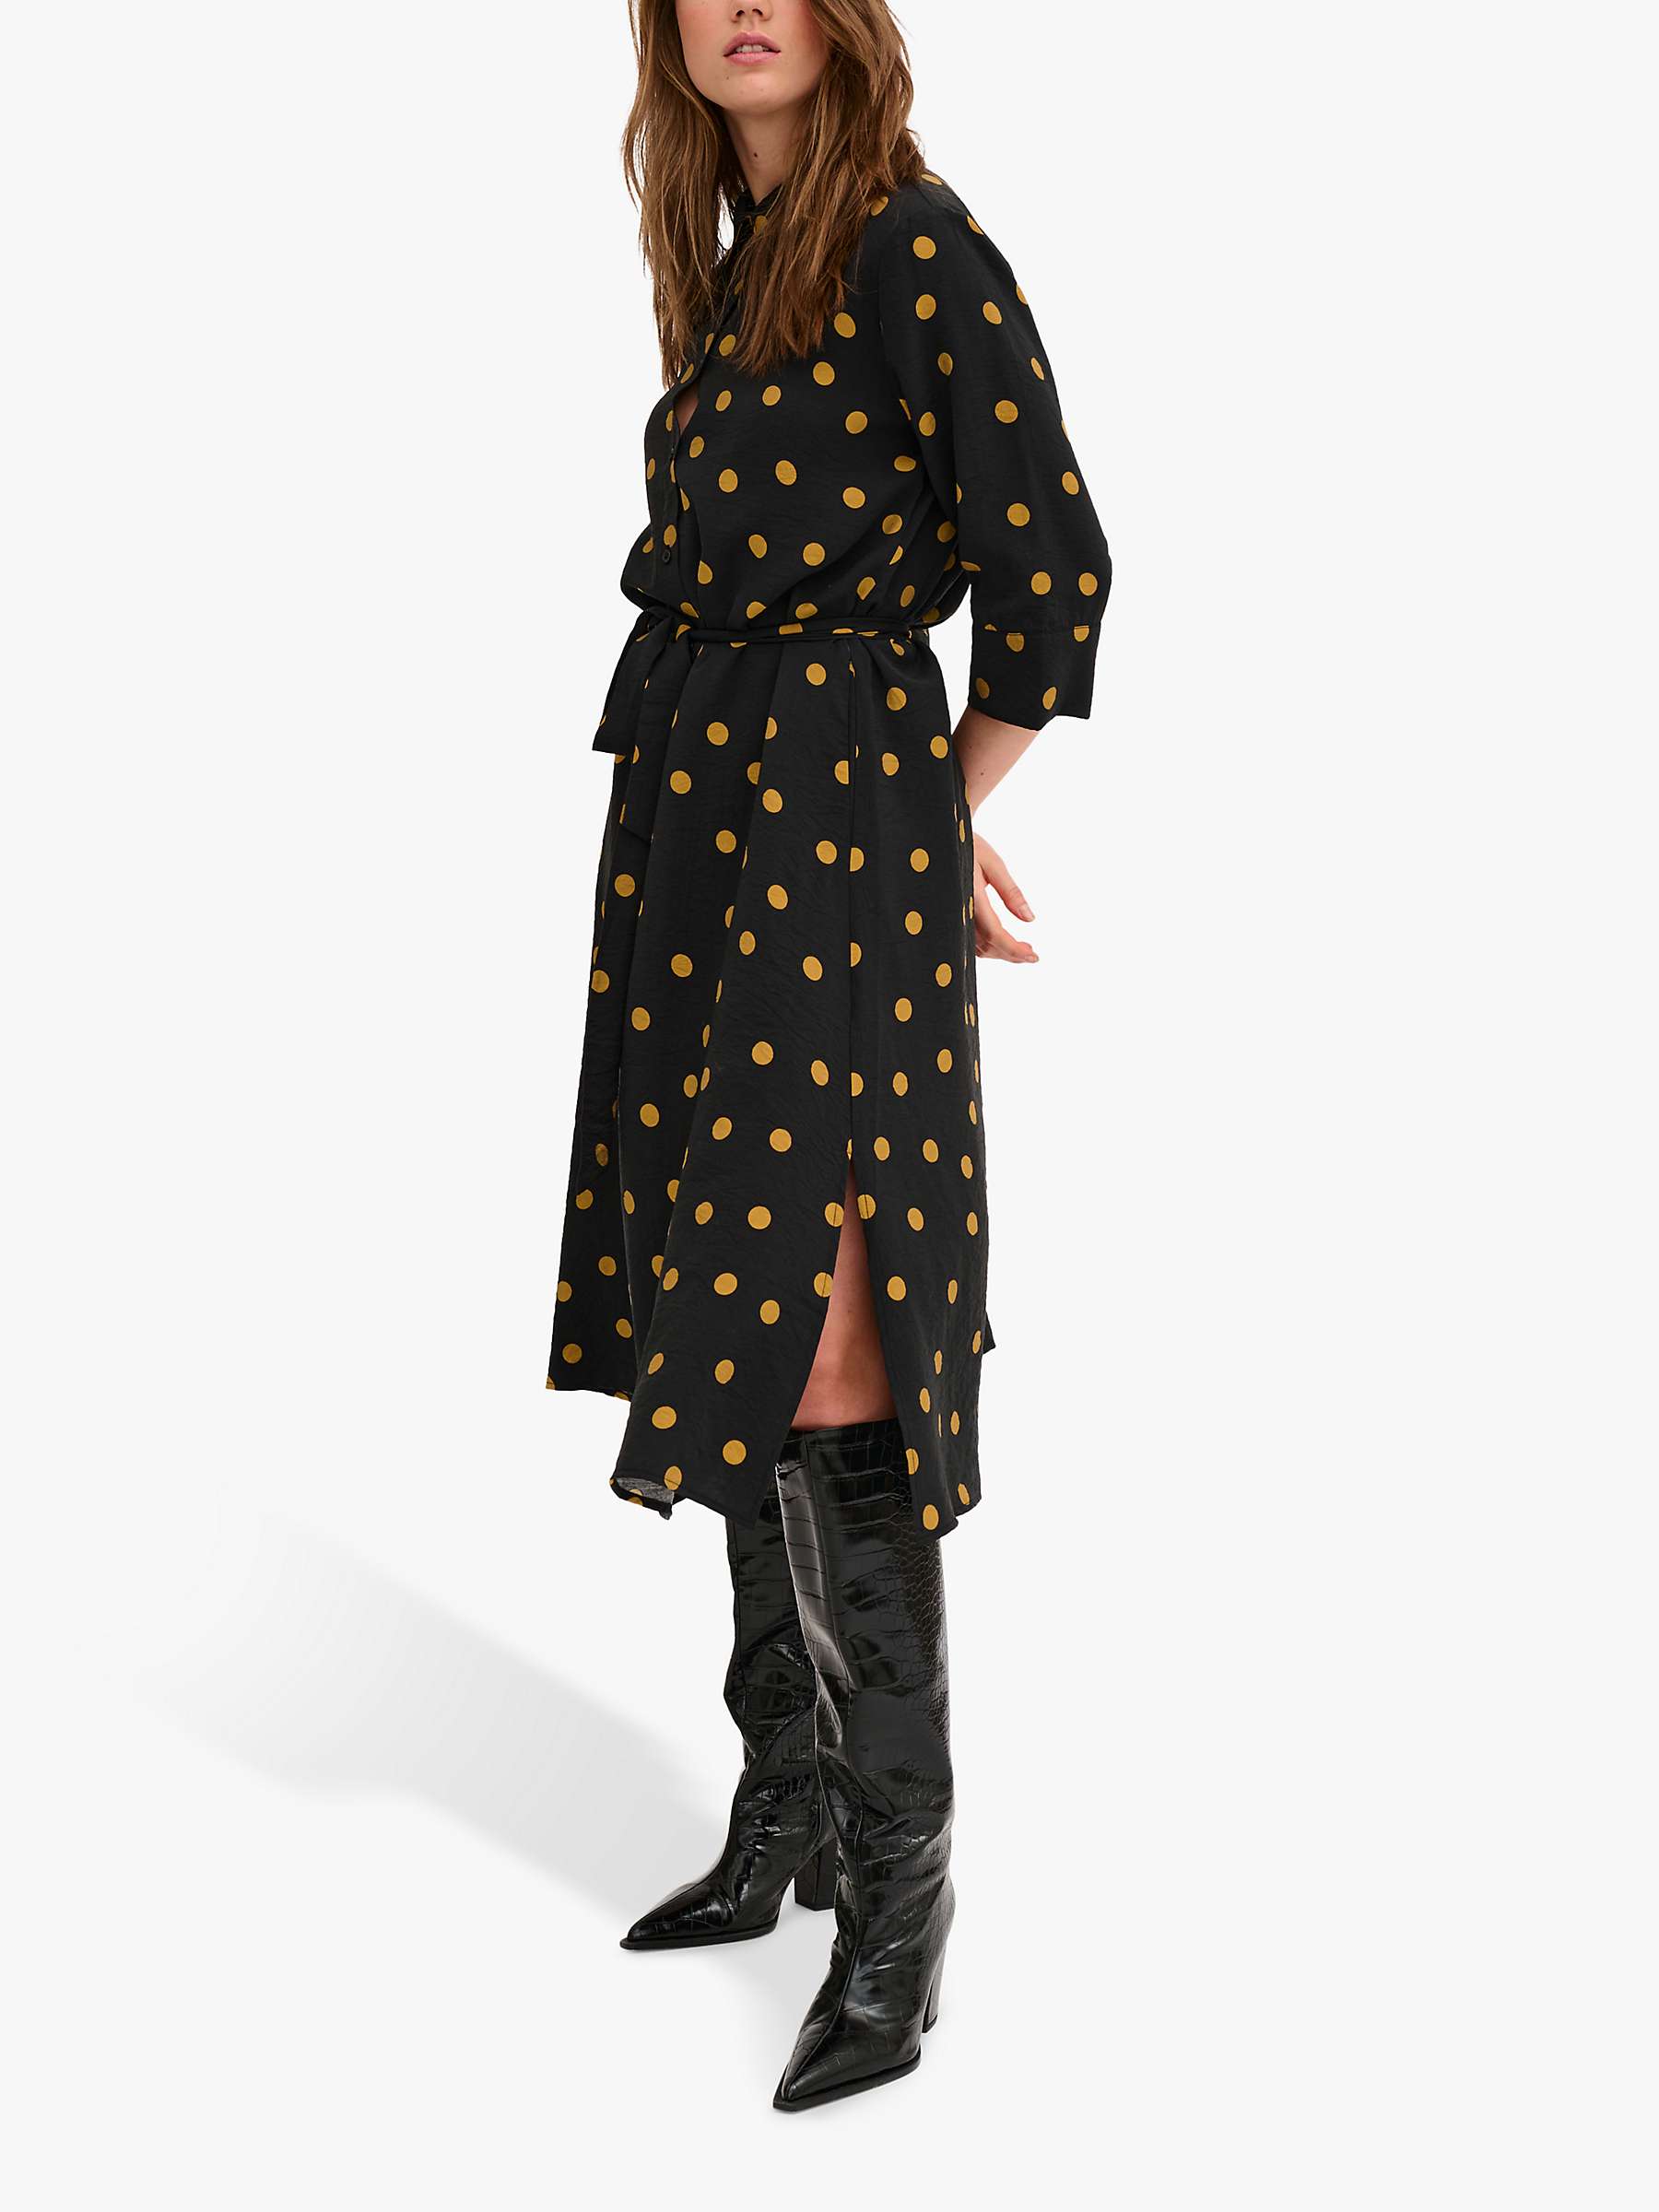 Buy MY ESSENTIAL WARDROBE Maria Costa Spot Dress, Black Online at johnlewis.com